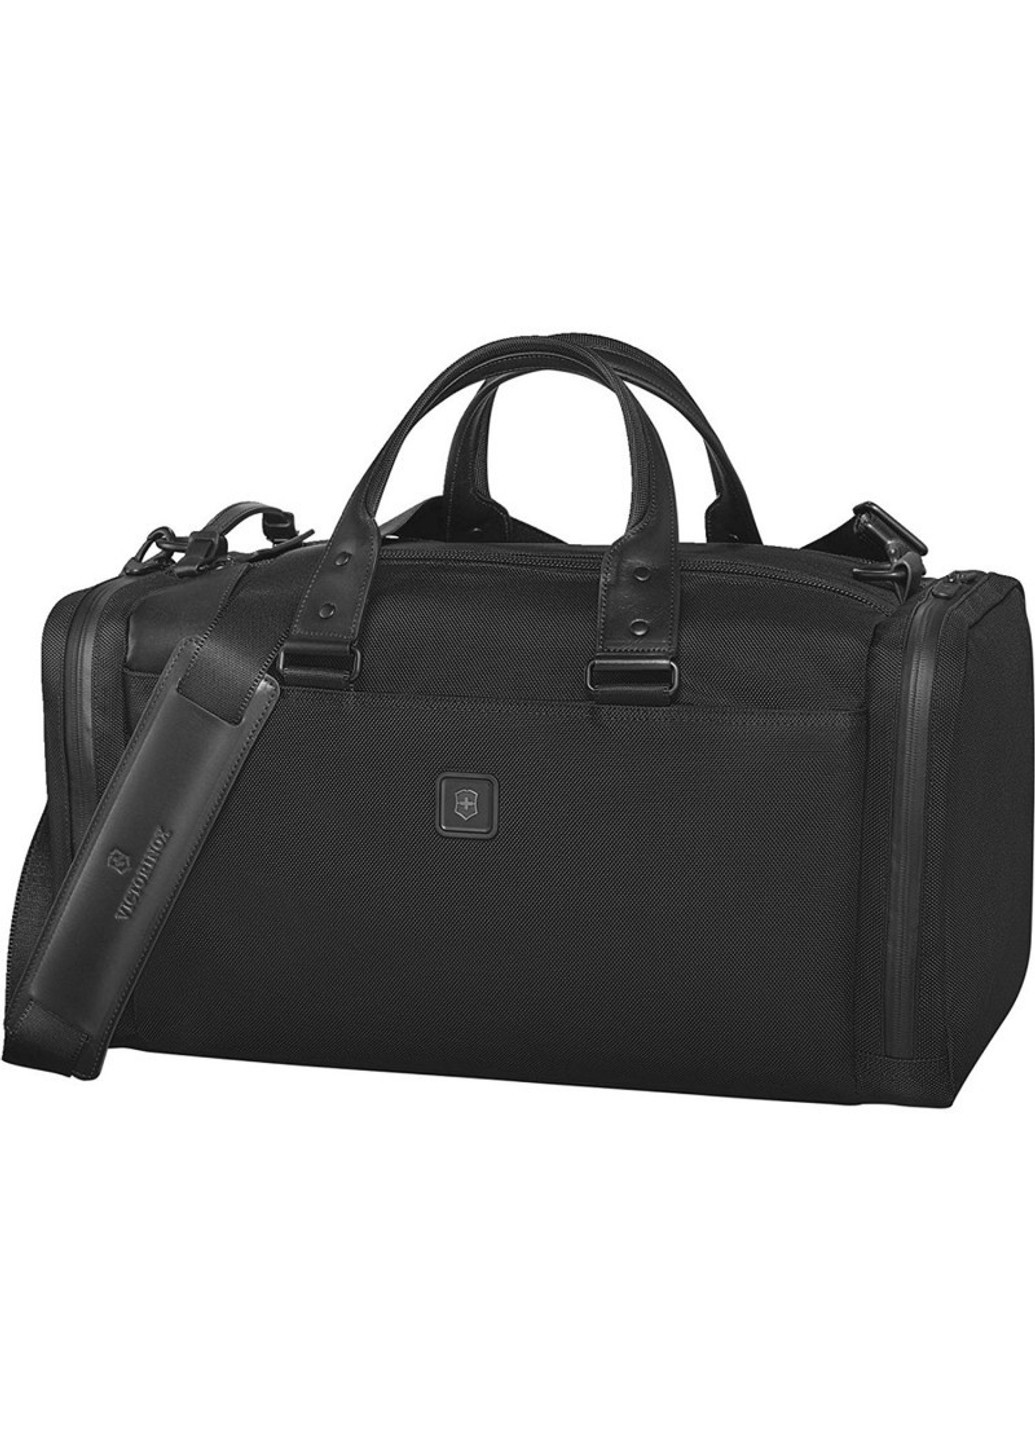 Дорожная сумка LEXICON 2.0/Black Vt601194 Victorinox Travel (271813682)